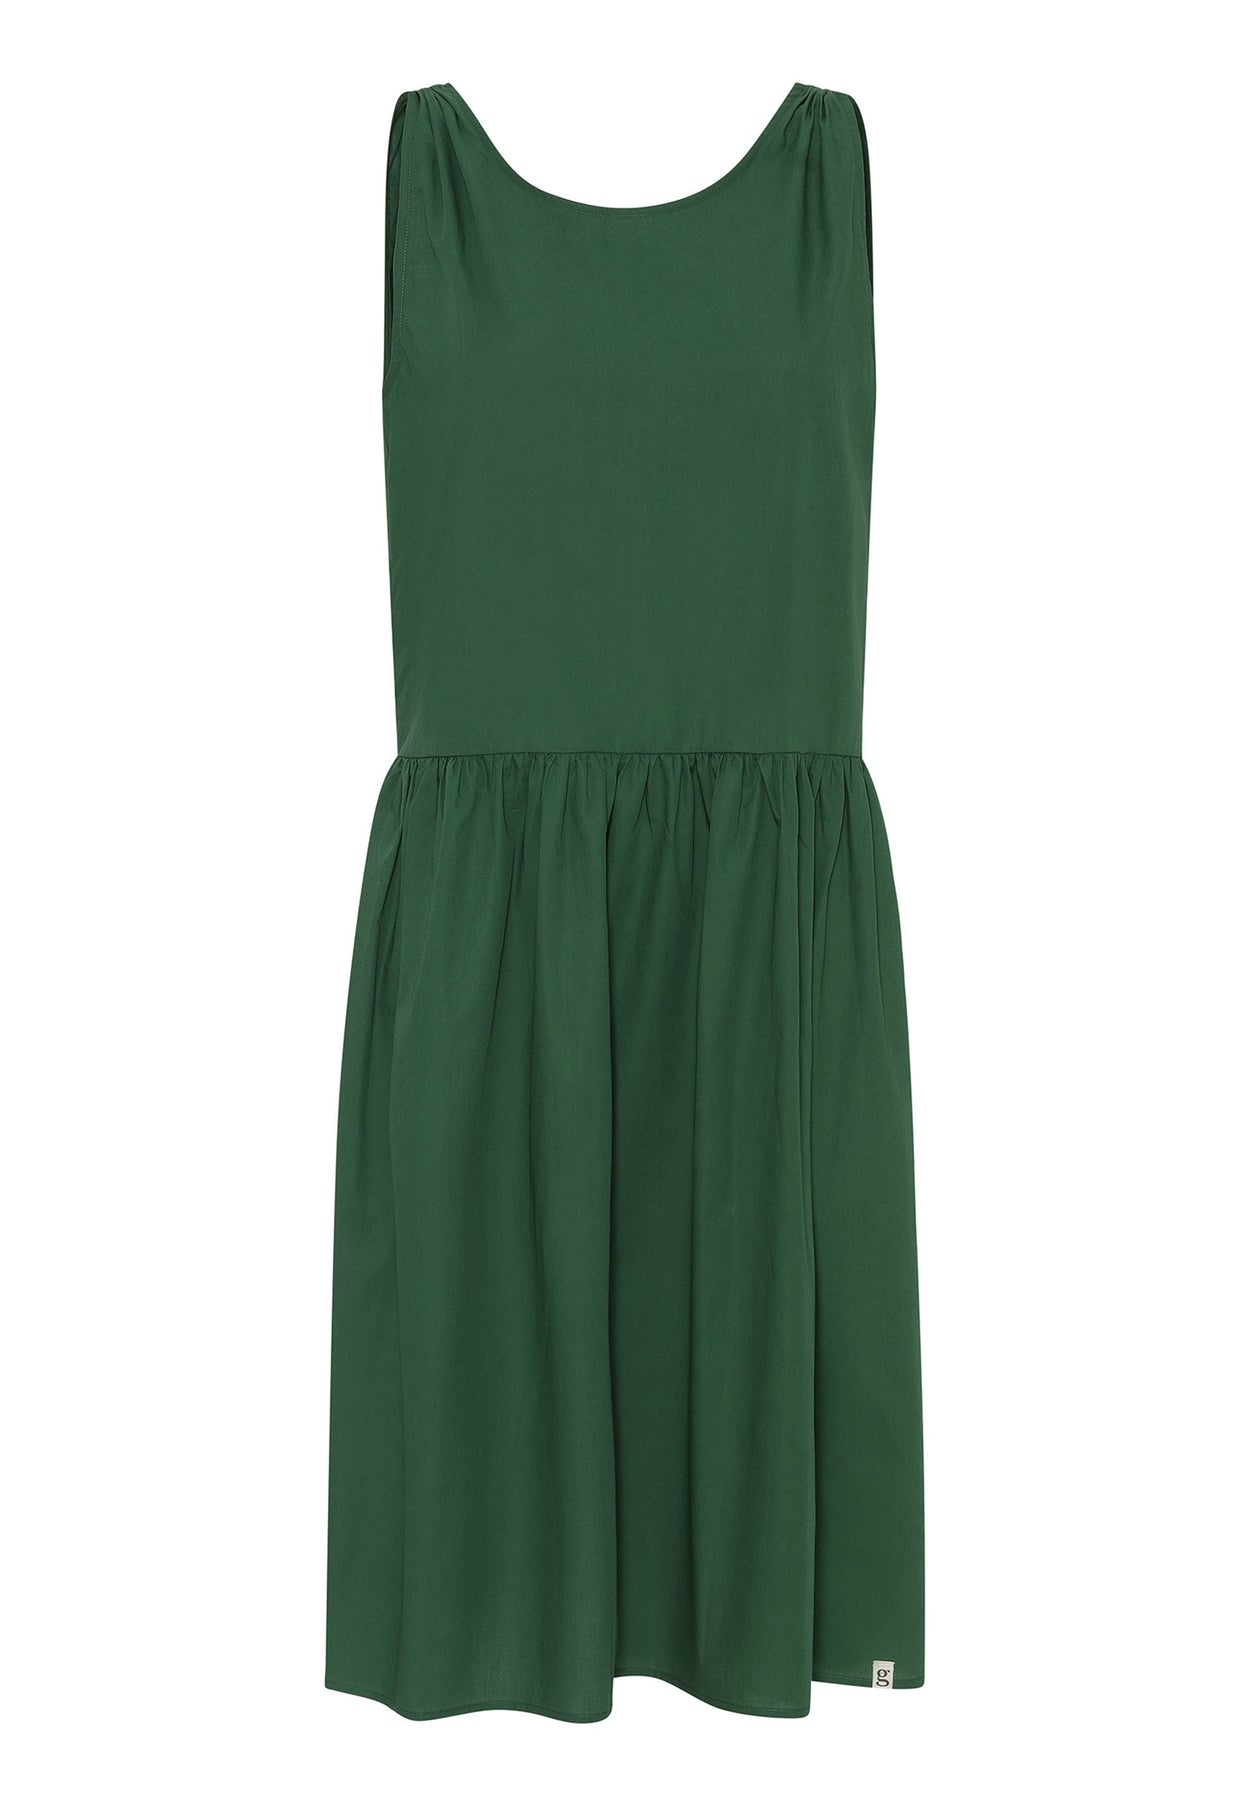 GROBUND Vilma kjolen - den vendbare i mørkegrøn